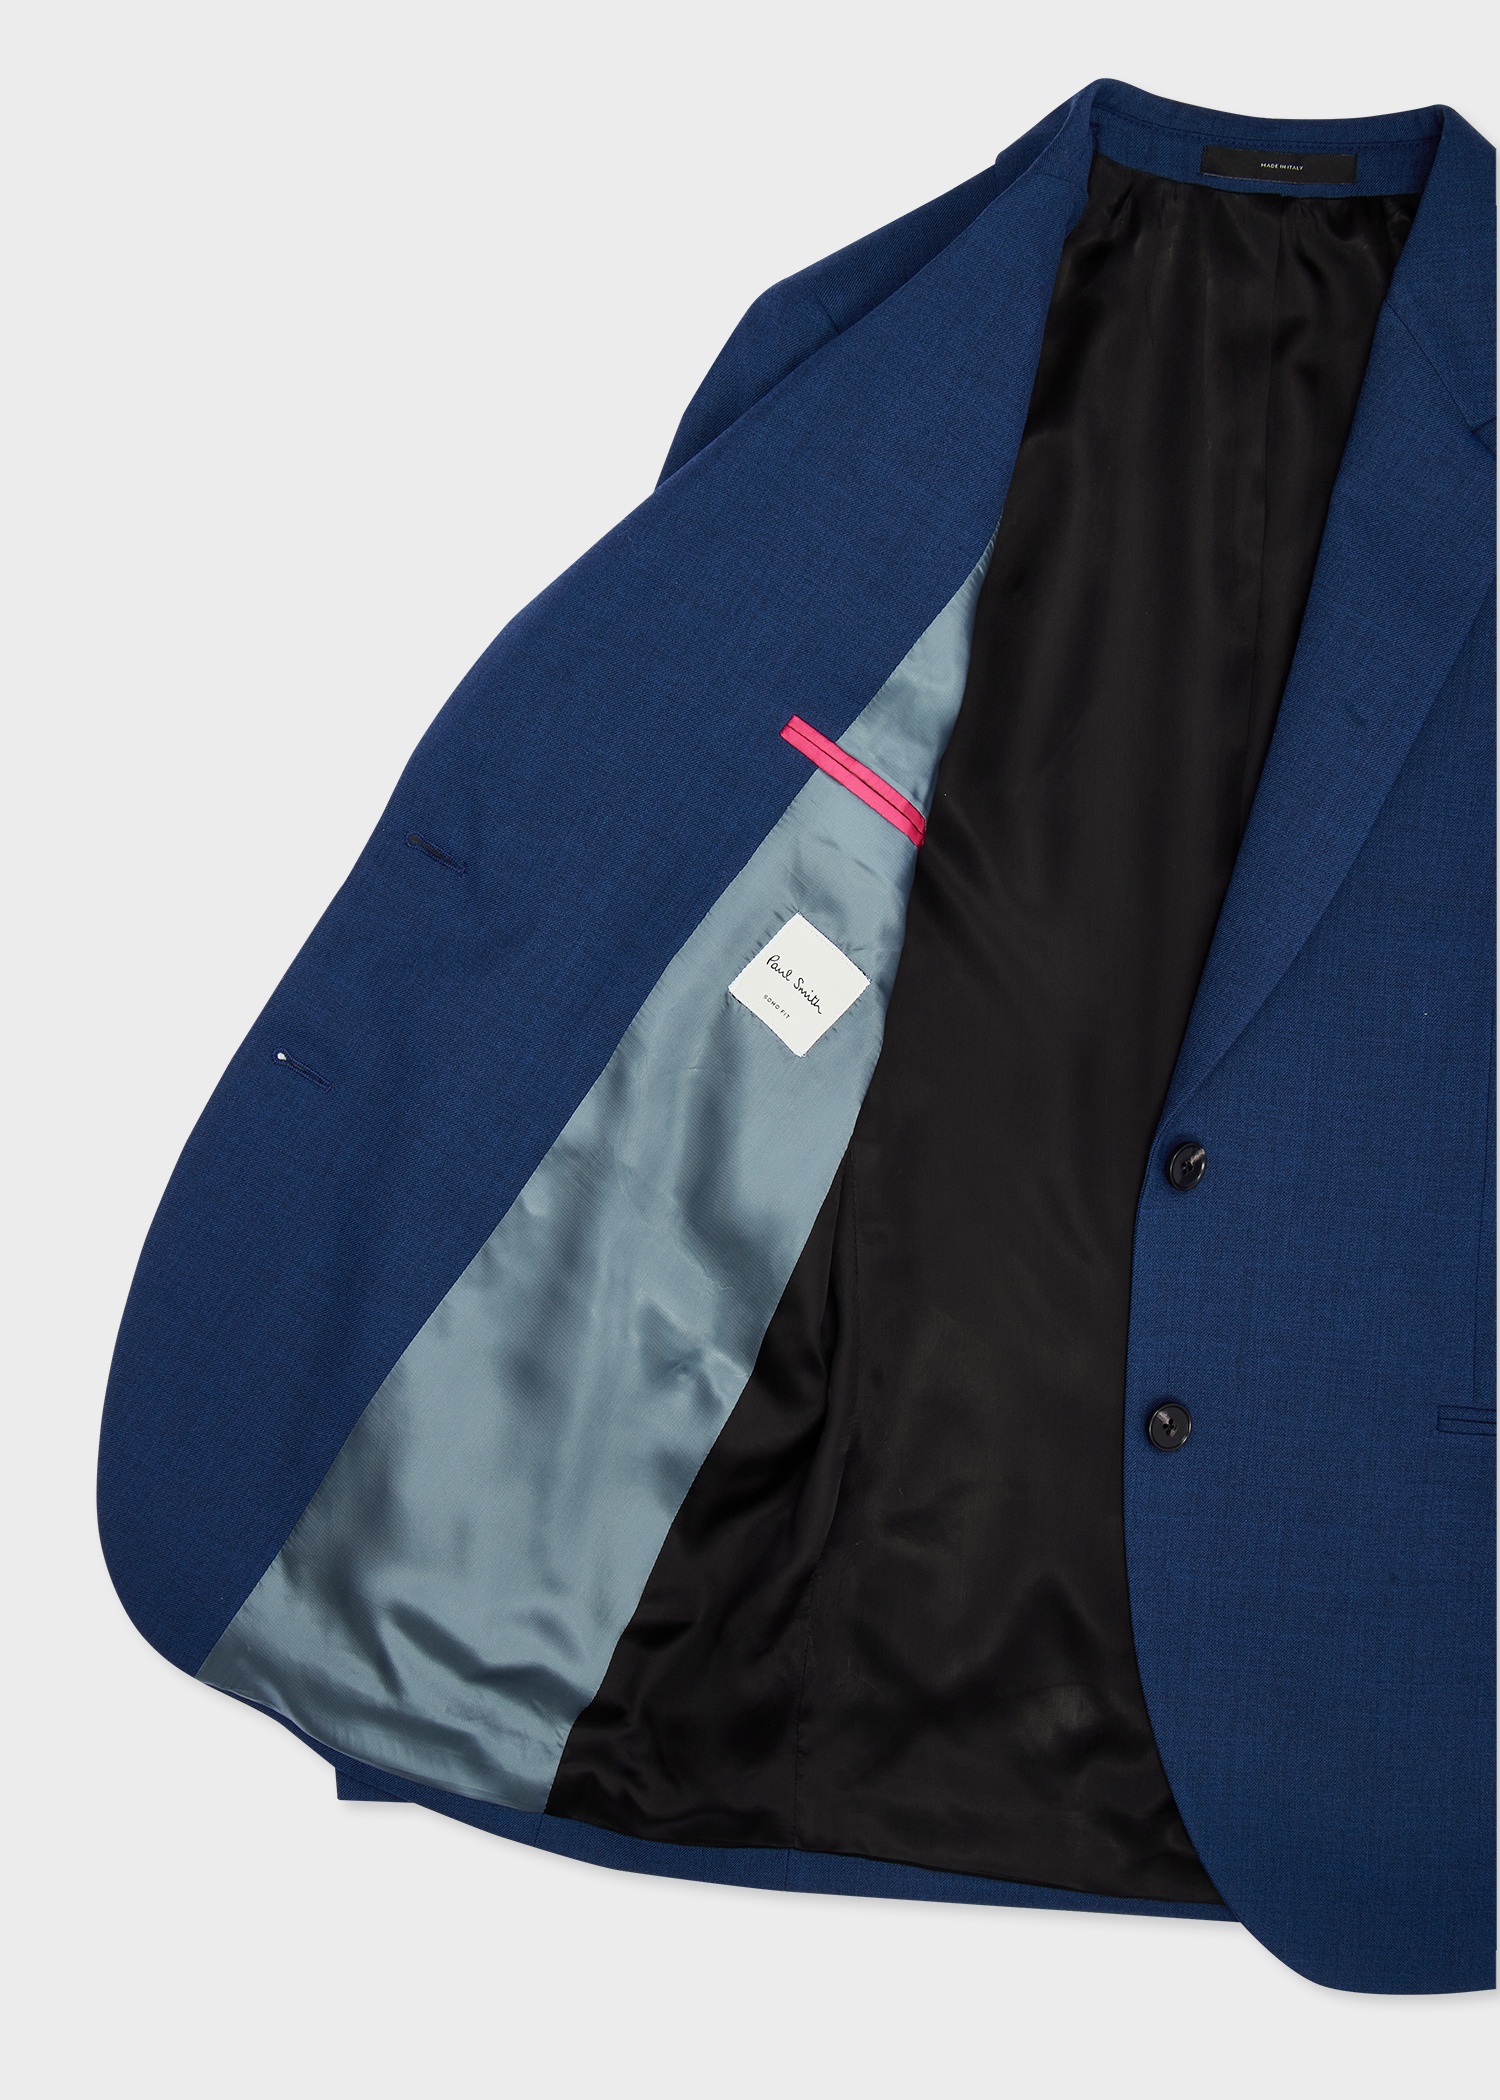 Women's A Suit To Travel In - Dark Blue Wool Two-Button Blazer - 2